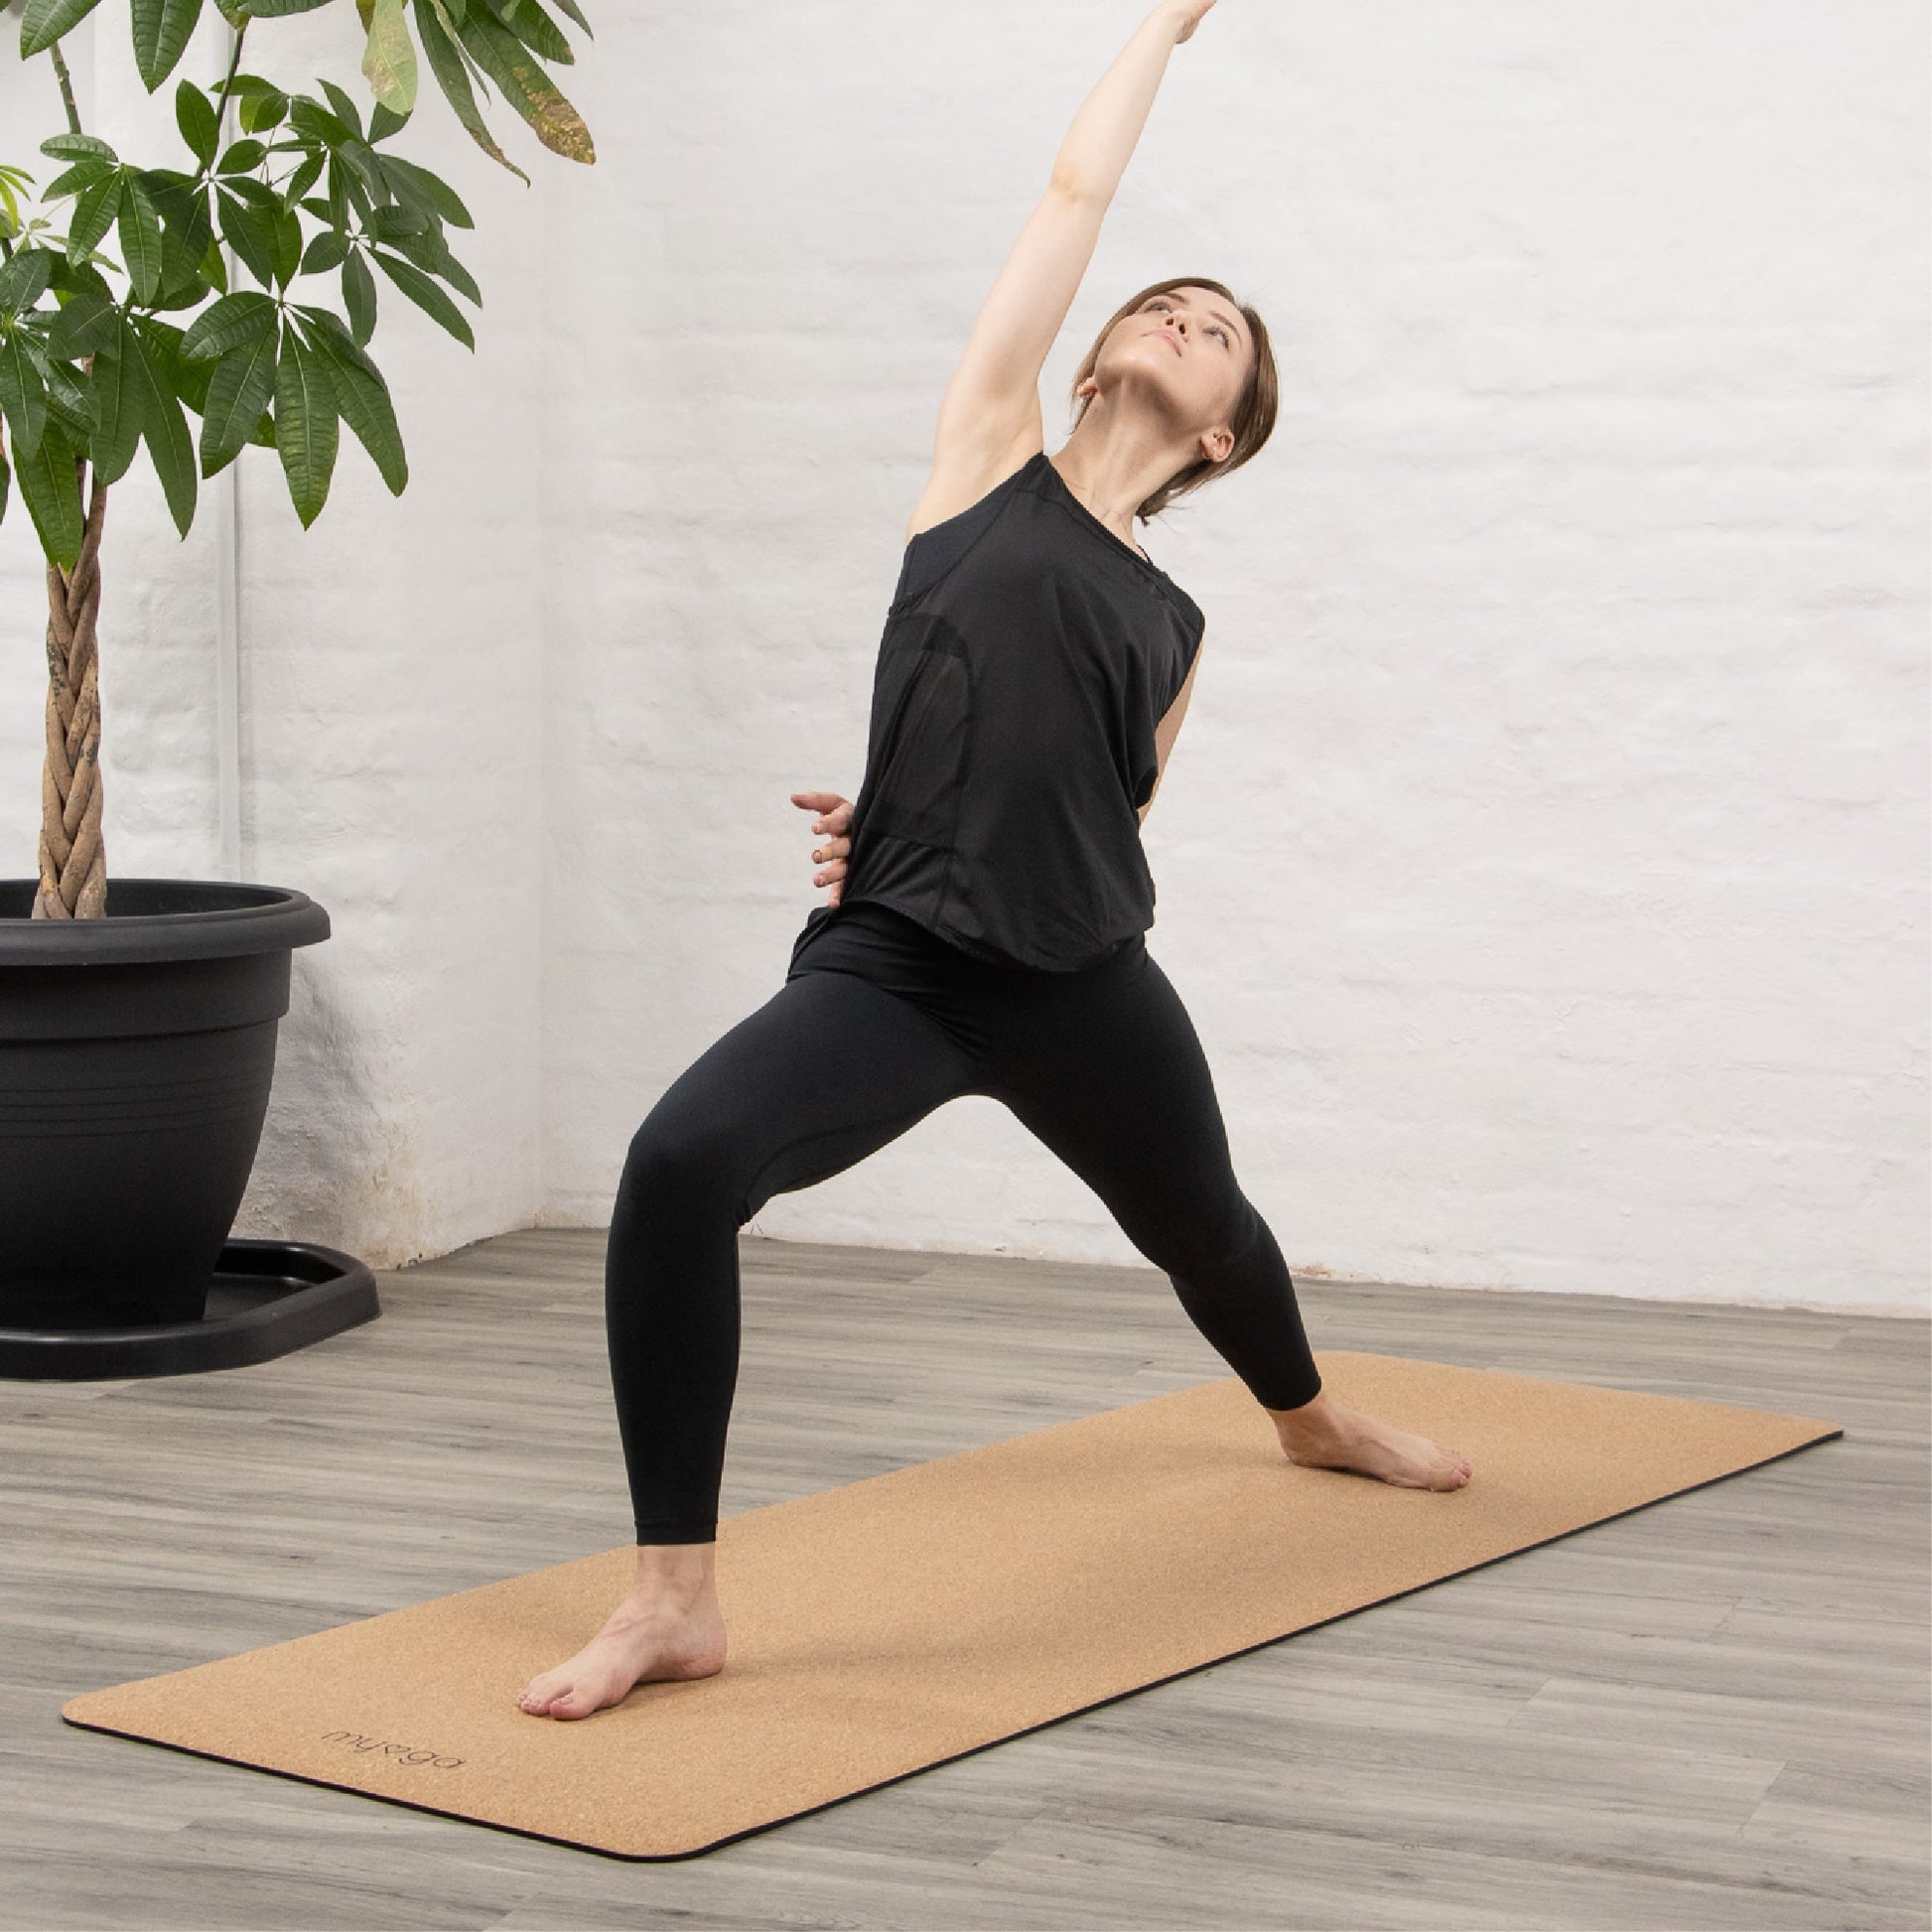 KEEMARU Premium Cork Yoga Mat - Extra Large and Extra Thick Yoga